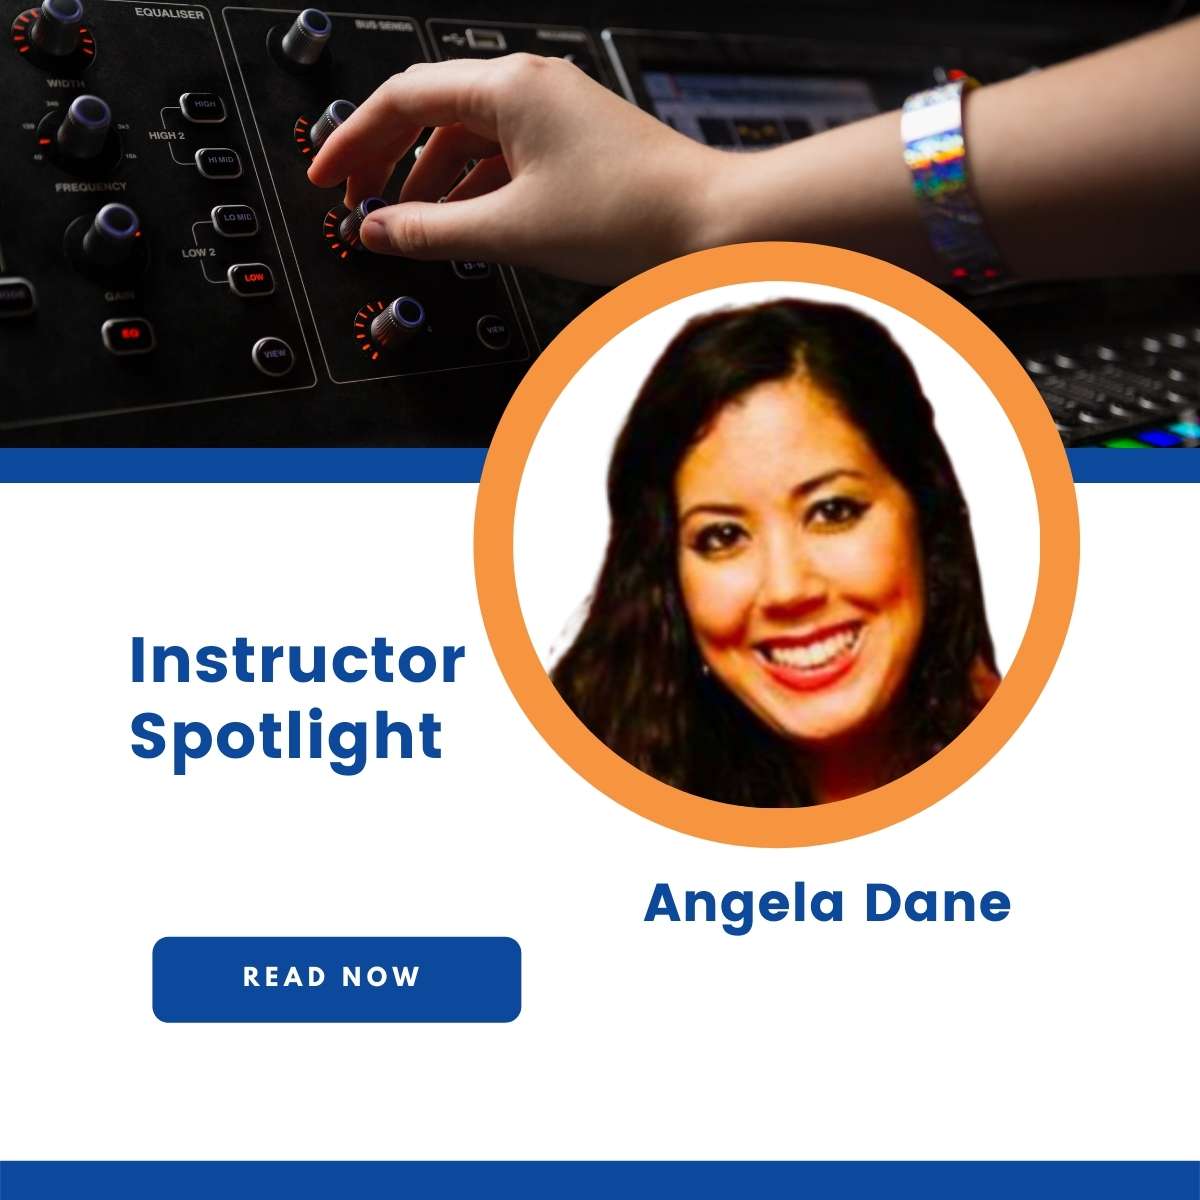 Meet Angela Dane